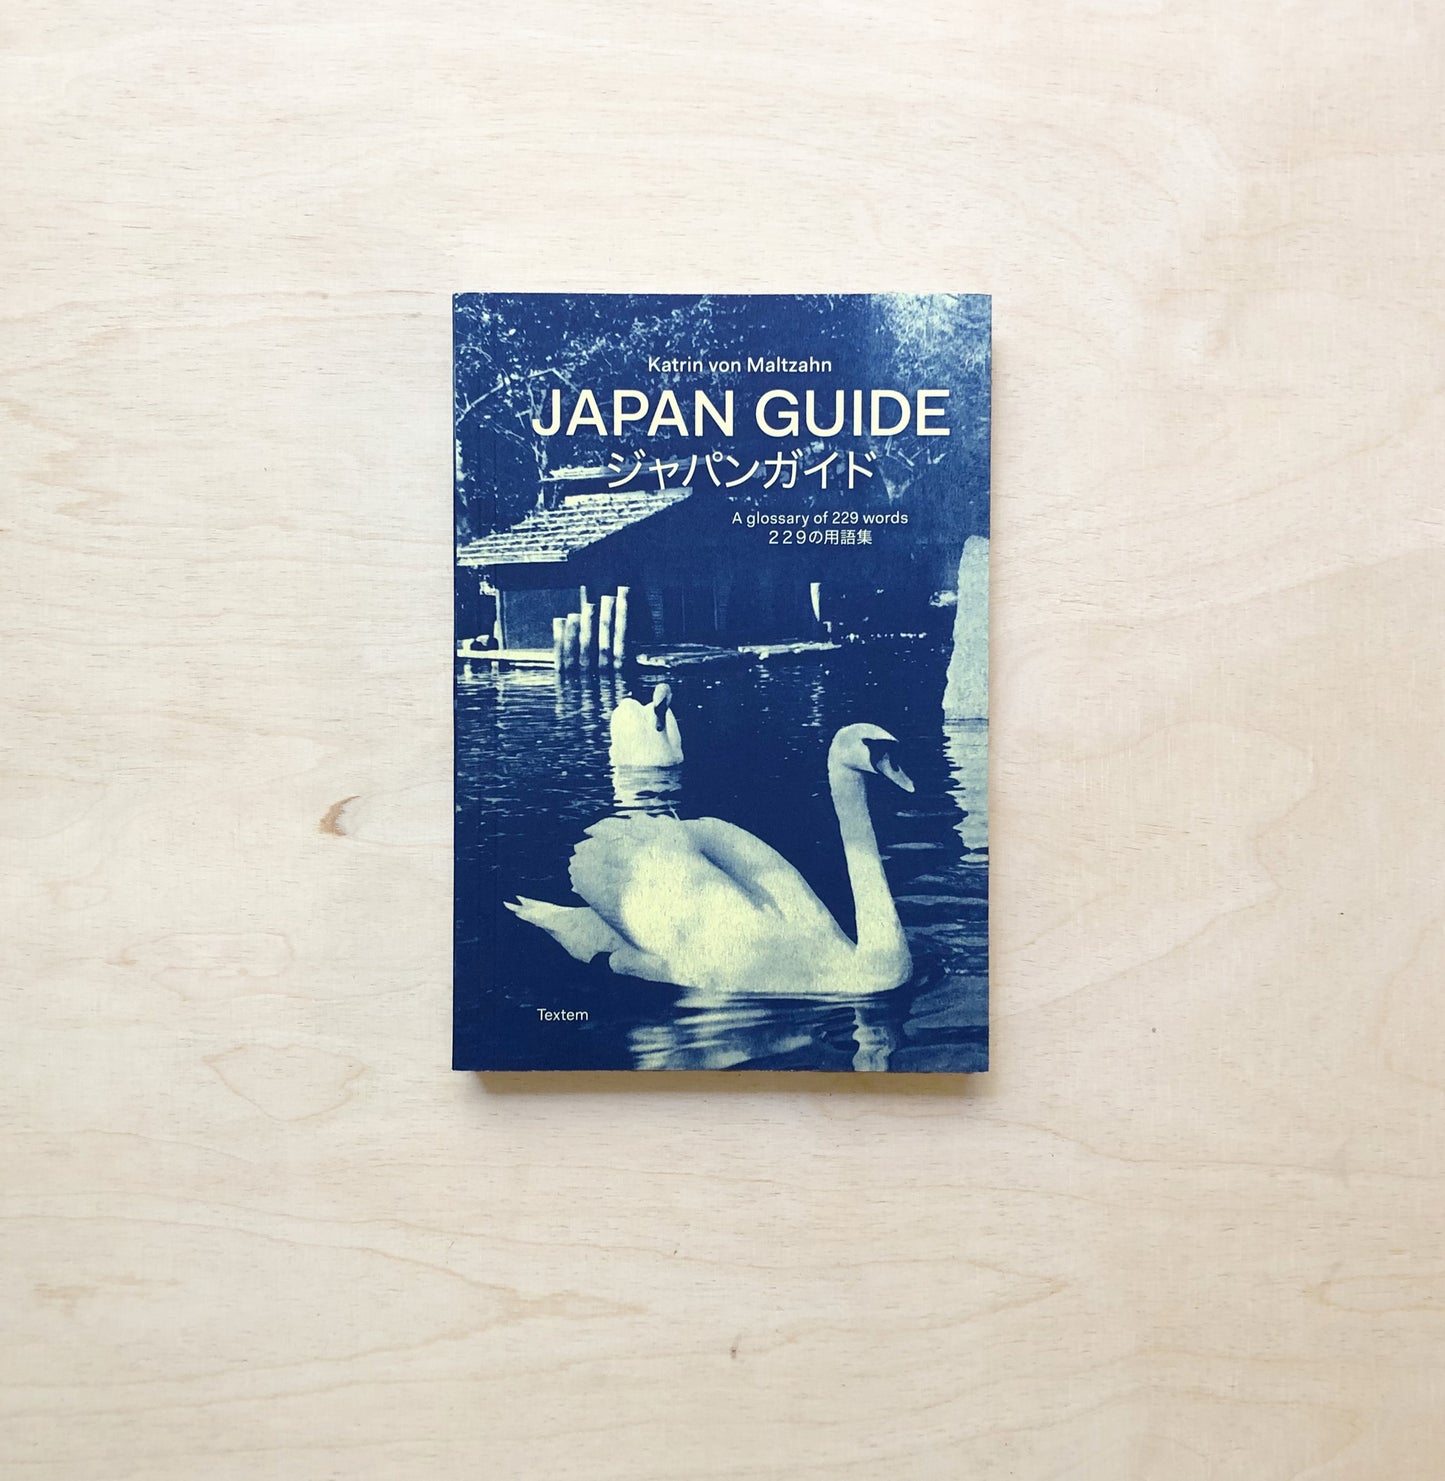 Japan Guide (deutsch + english)